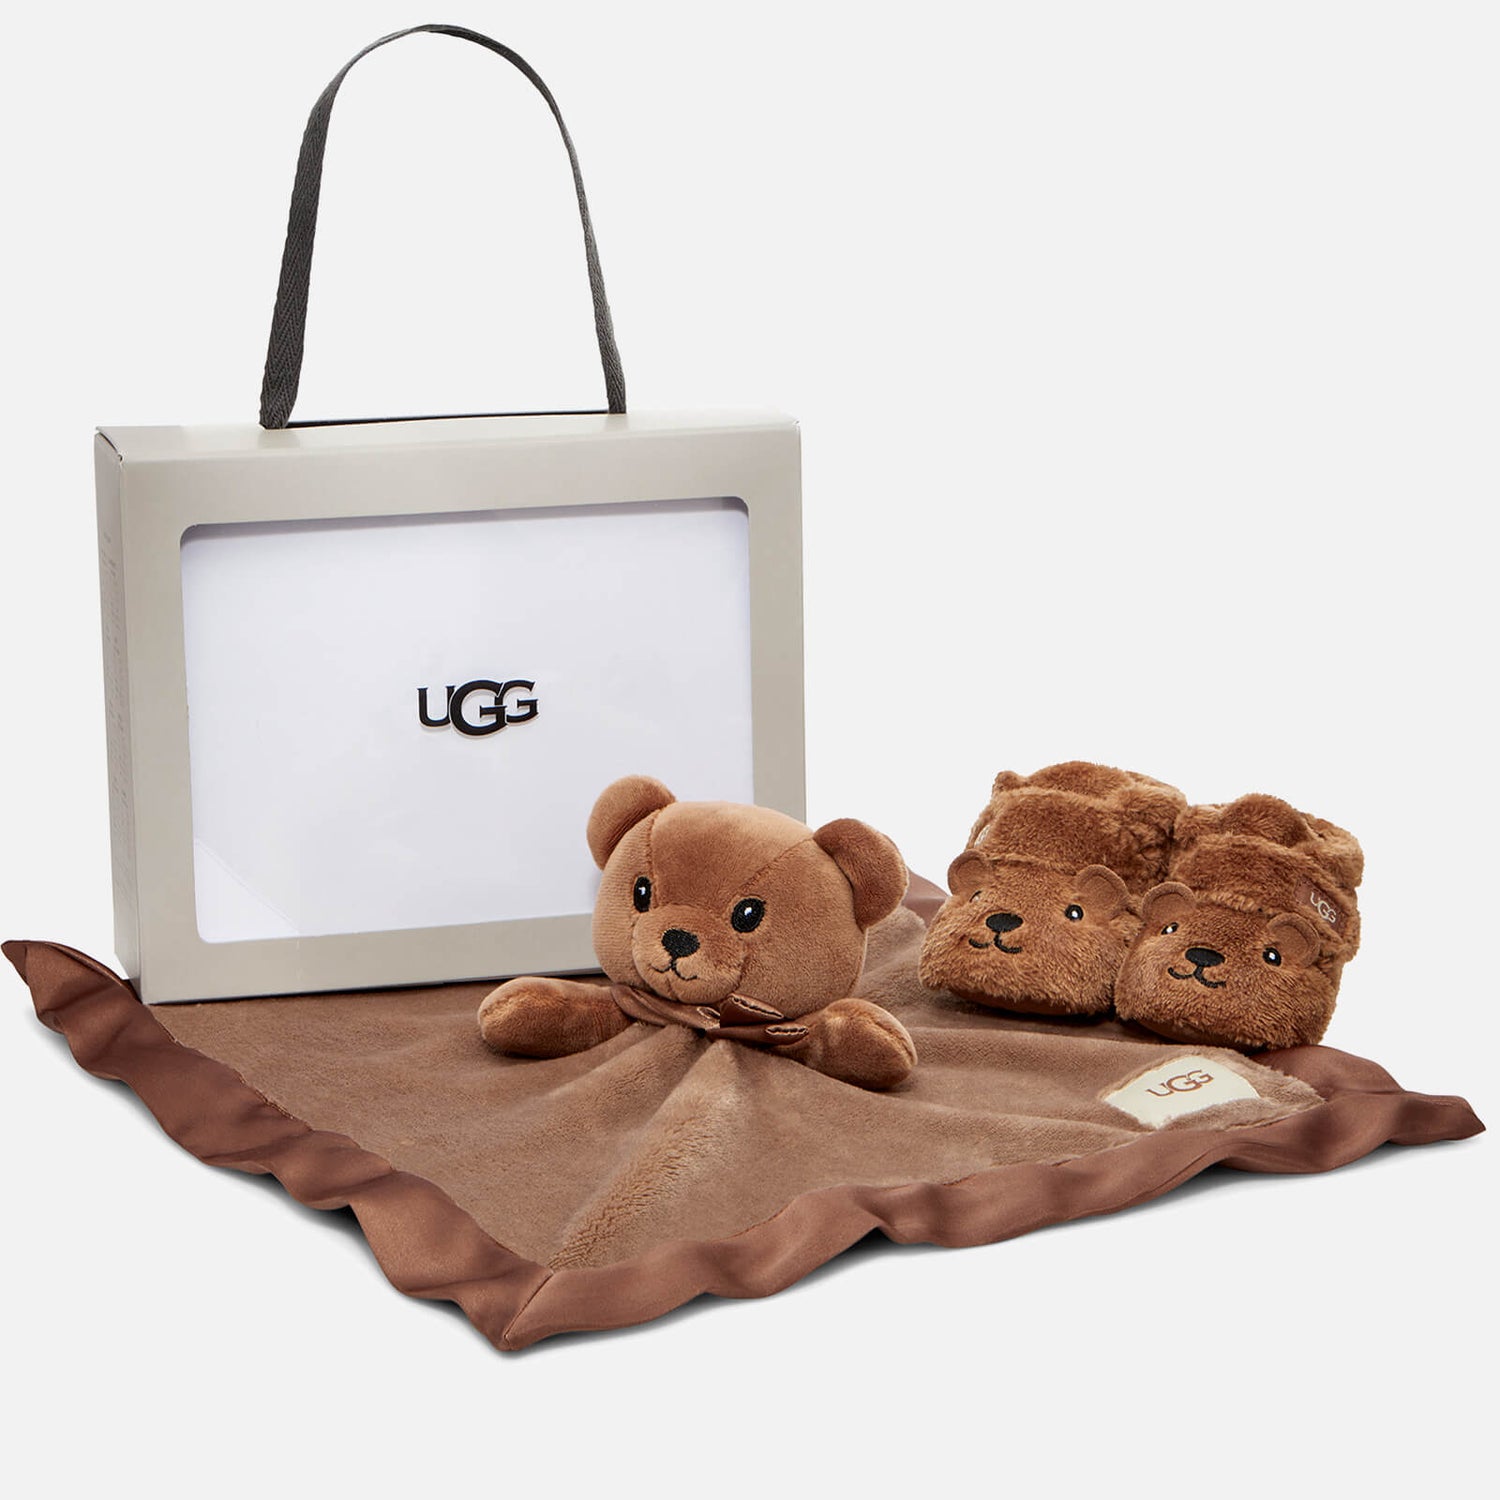 UGG Babies’ Bixbee Fleece Boots and Lovey Bear Comforter Gift Set - Newborn